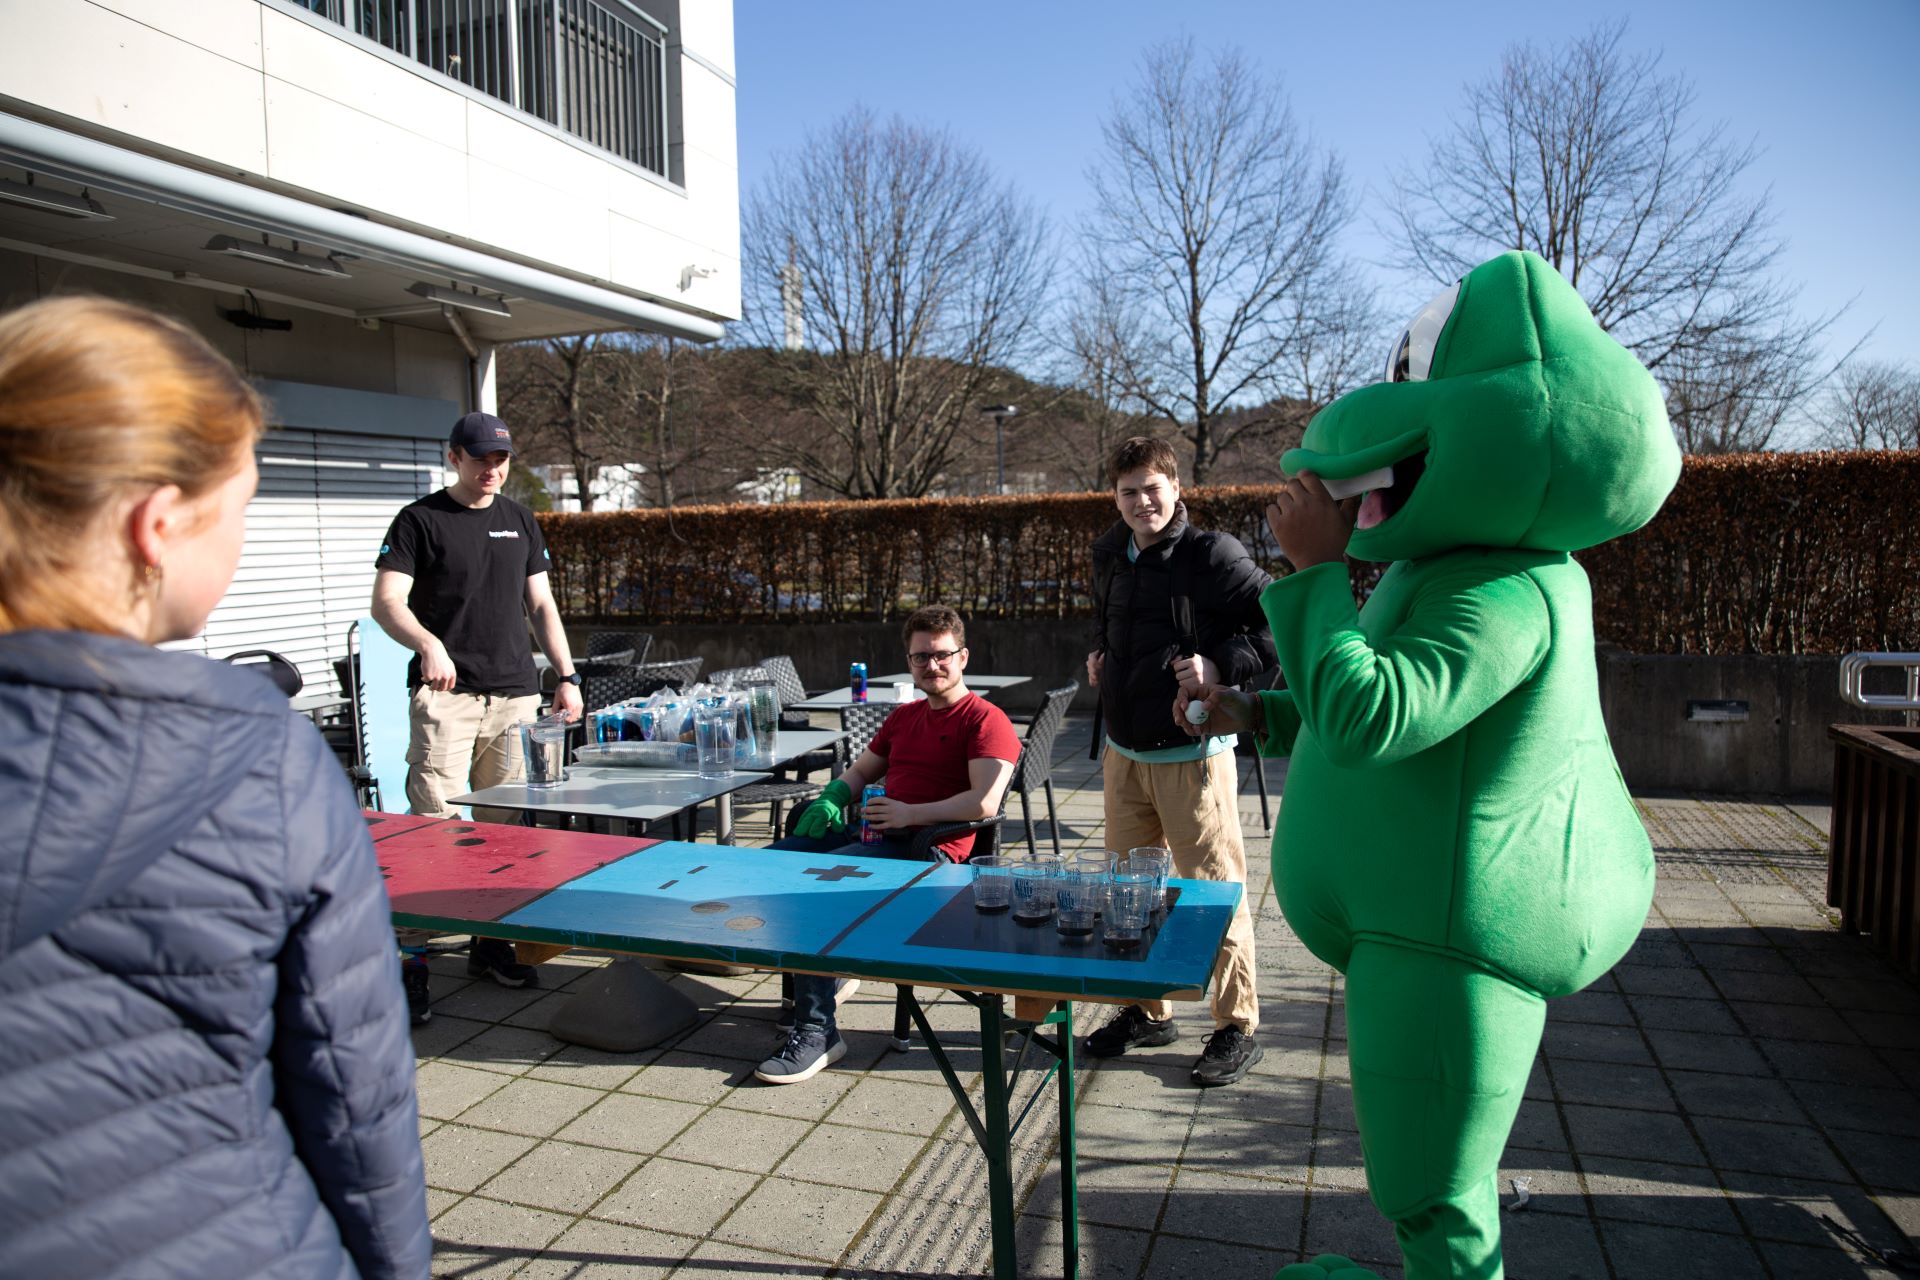 Personer og maskot spiller "Beer-pong" med energidrikk